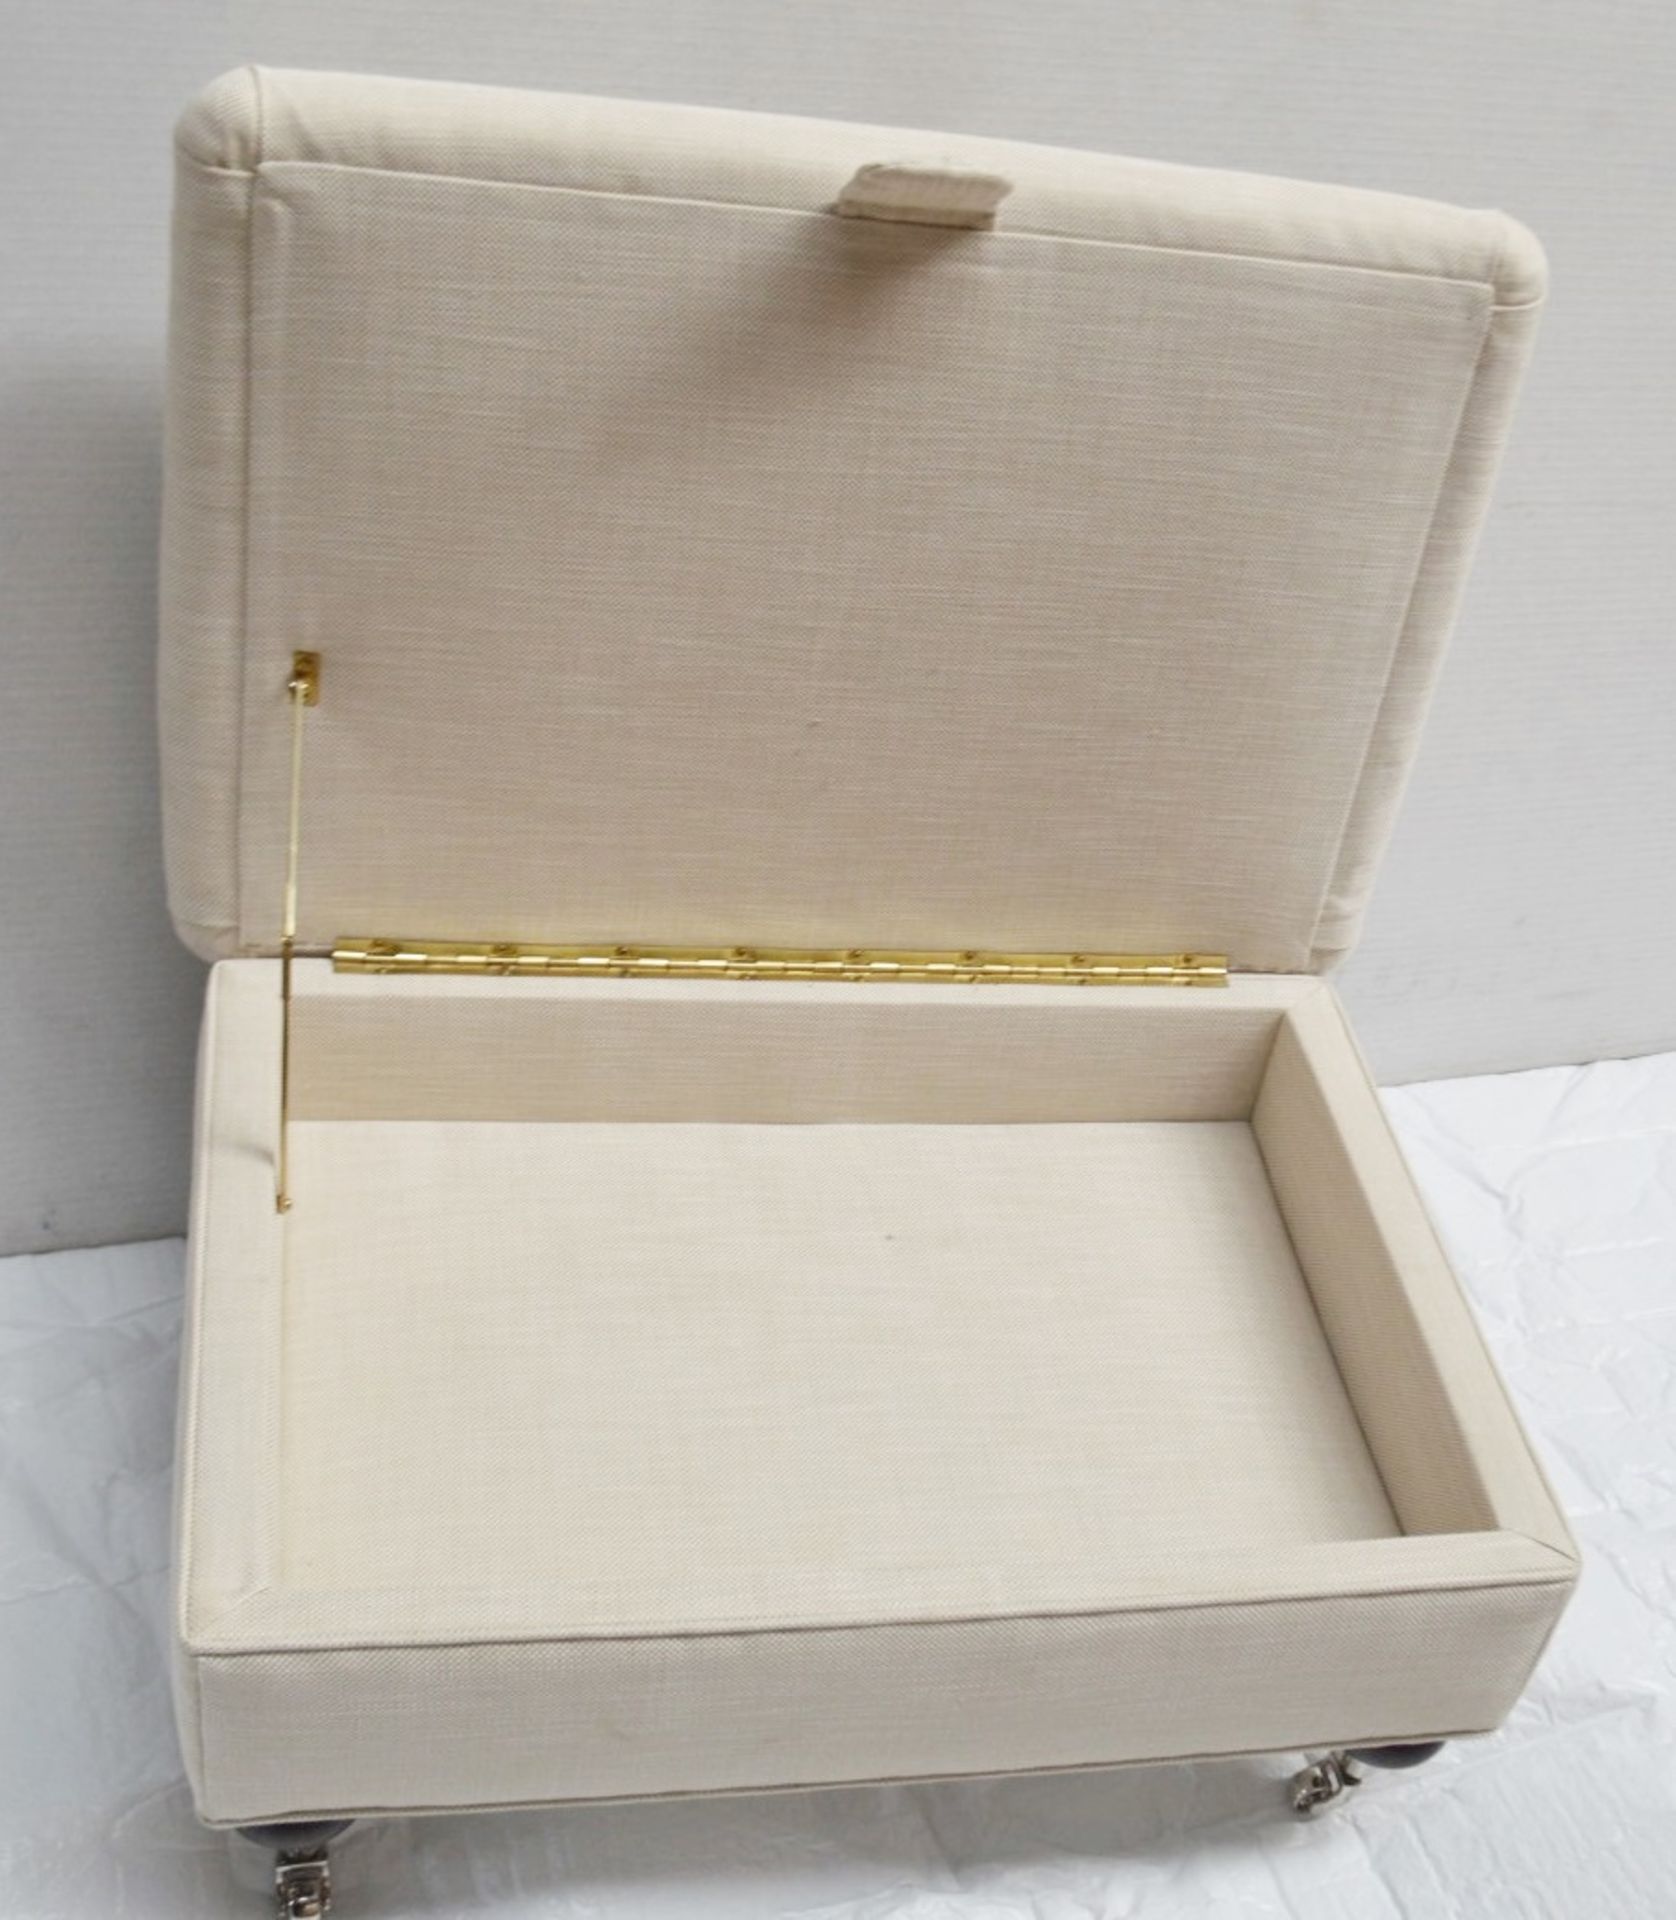 1 x DURESTA Ruskin Foot Stool Storage Box In Cream - Dimensions: W74 x D53 x H35cm - RRP £1,219 - Image 3 of 6